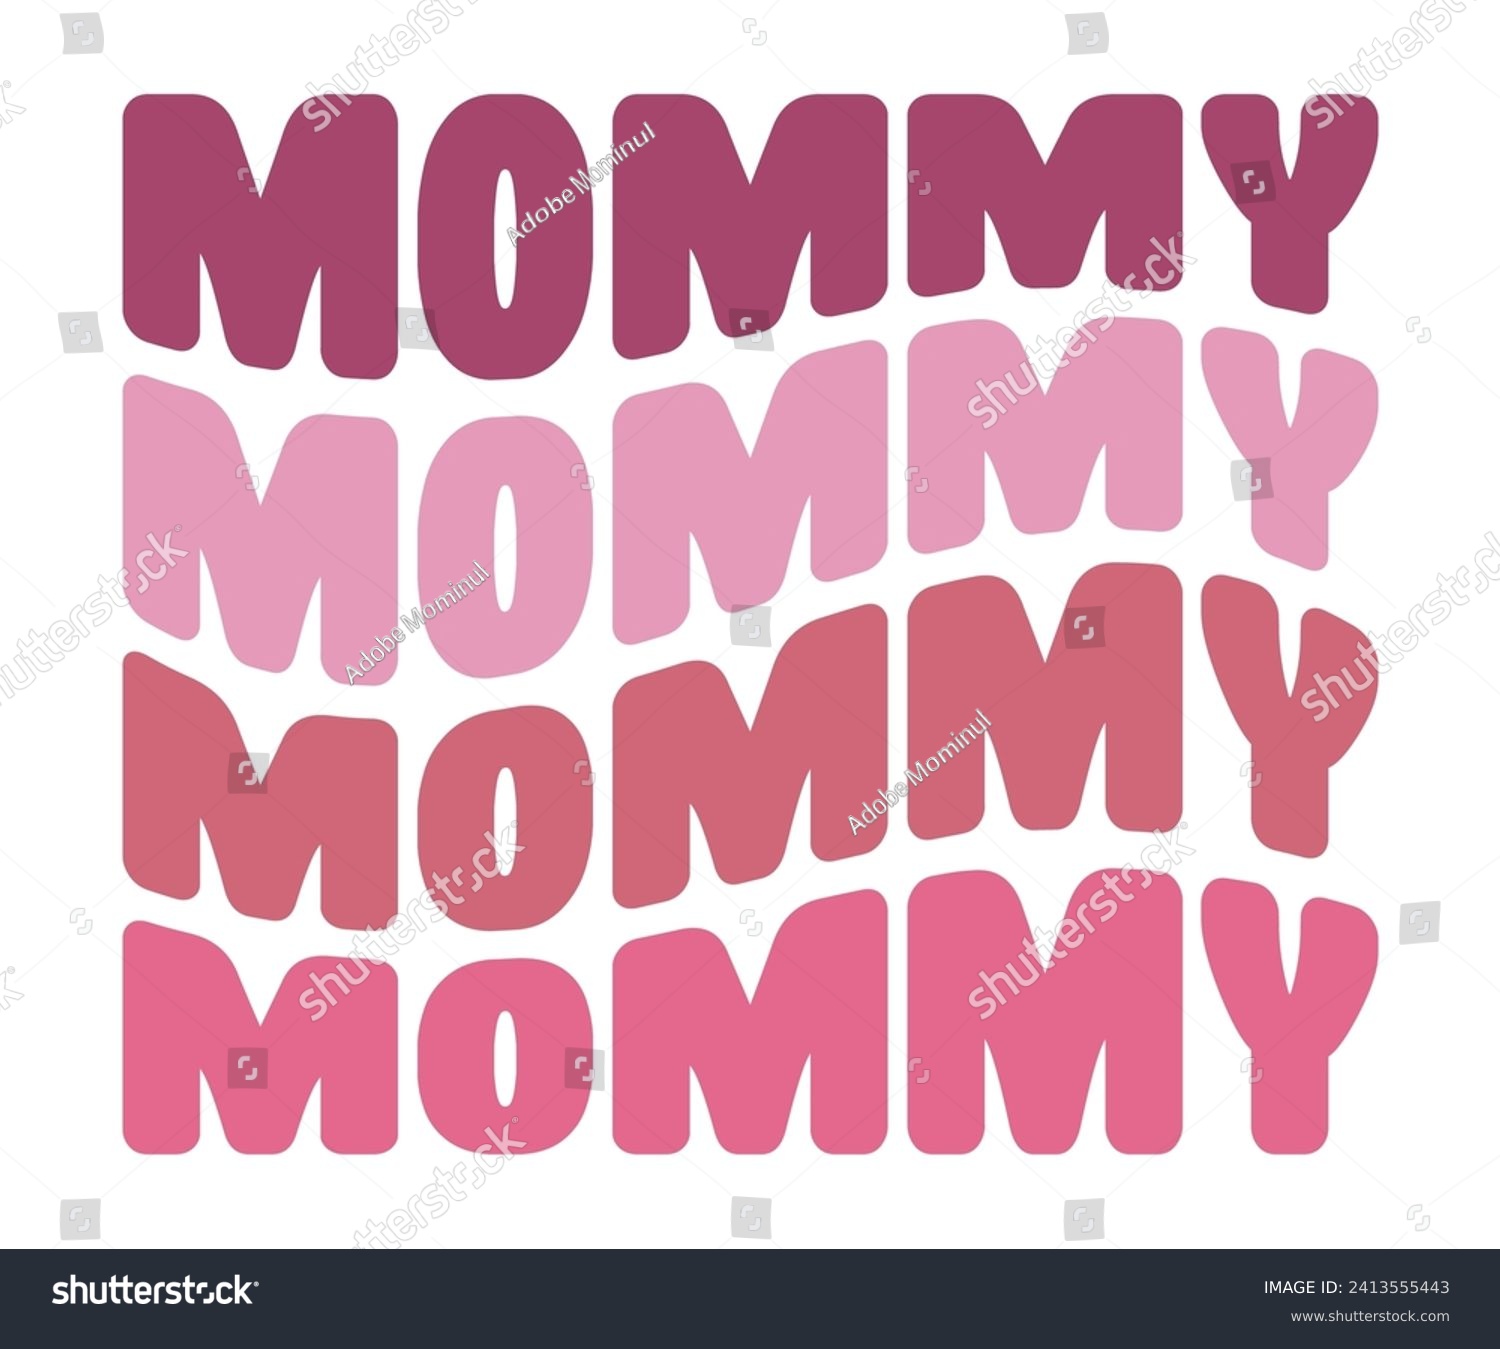 SVG of Mommy Retro Svg,Mothers Day Svg,Png,Mom Quotes Svg,Funny Mom Svg,Gift For Mom Svg,Mom life Svg,Mama Svg,Mommy T-shirt Design,Svg Cut File,Dog Mom deisn,Retro Groovy,Auntie T-shirt Design, svg